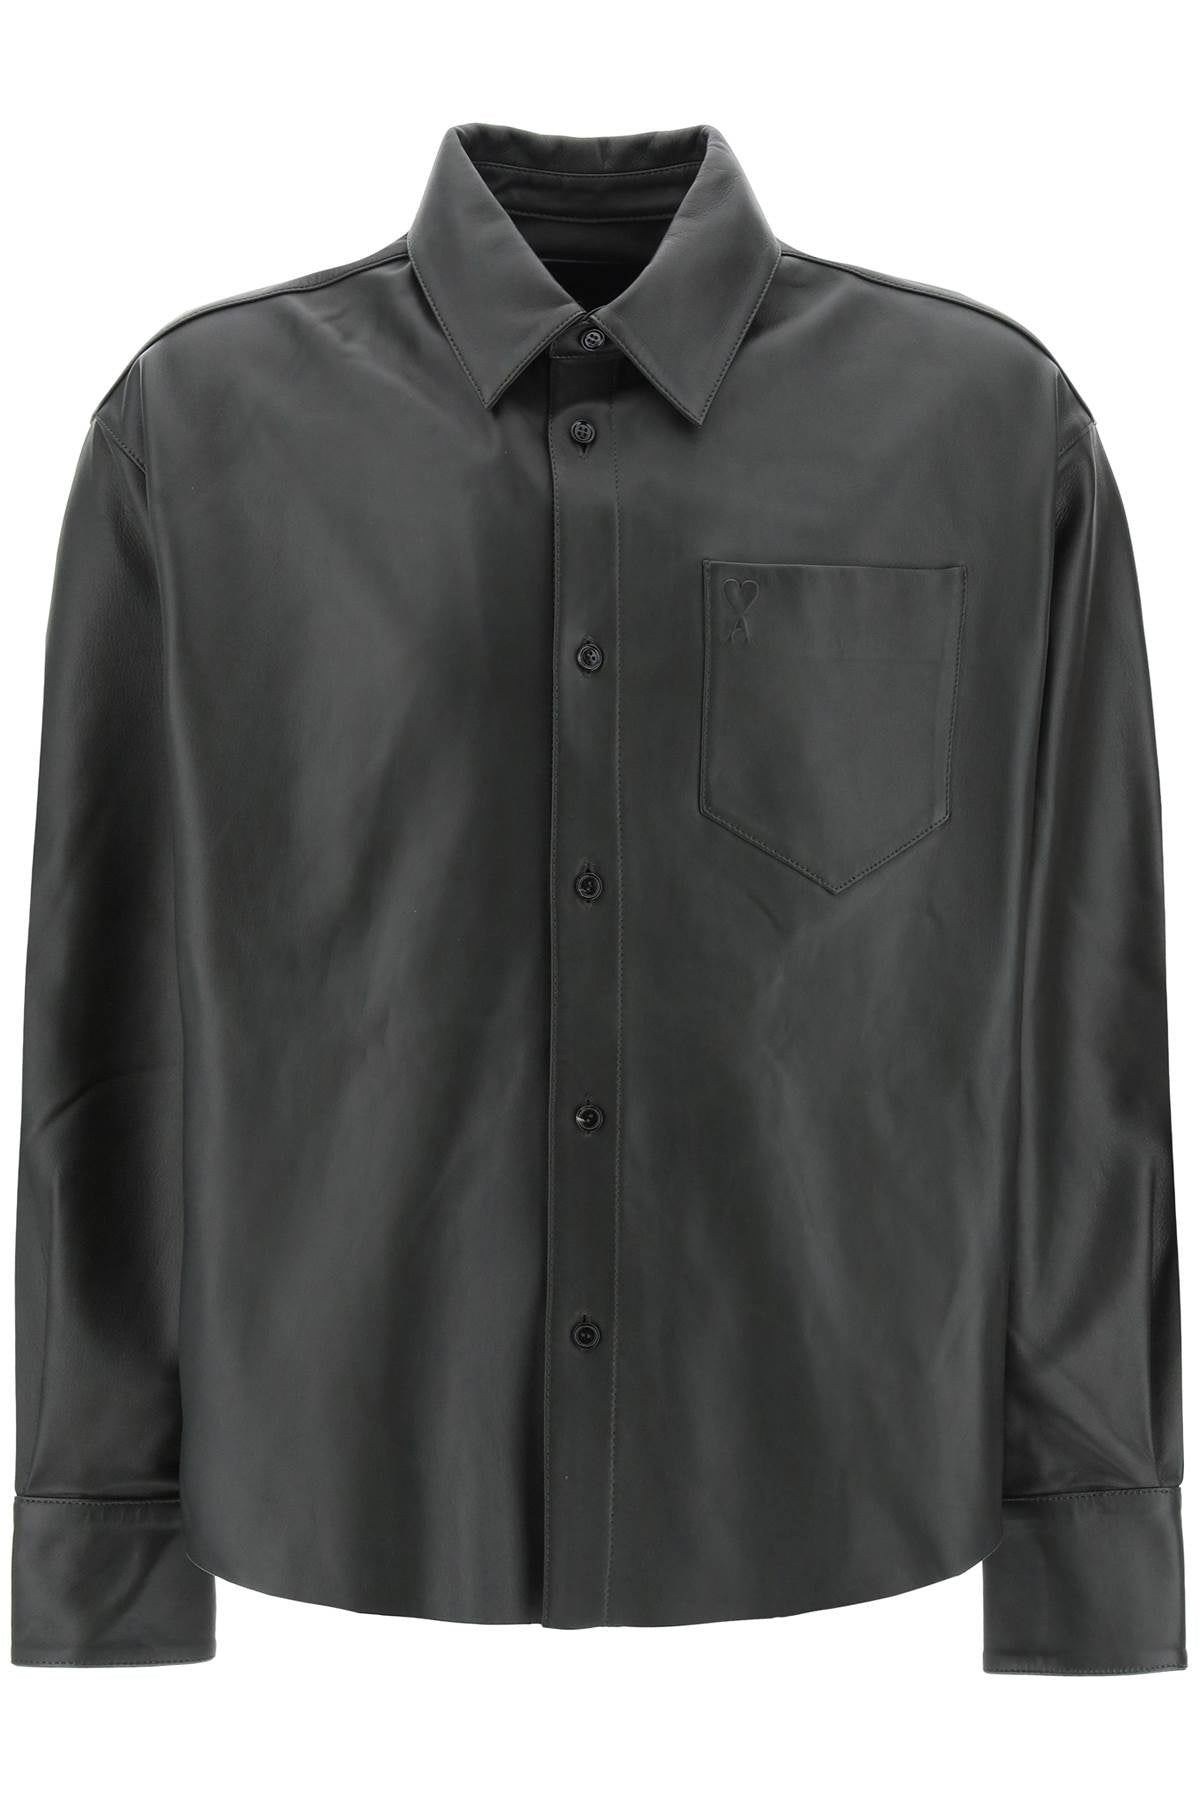 Ami paris nappa leather overshirt-0